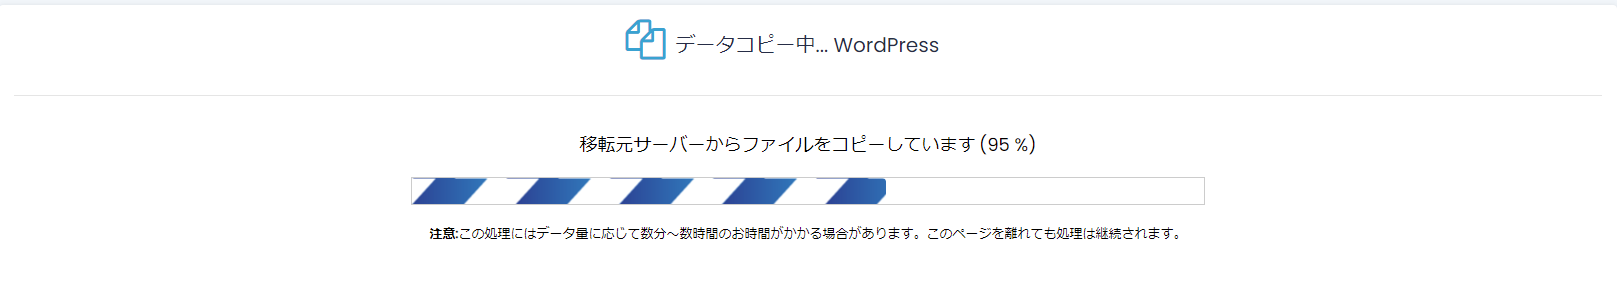 WordPress_______________.png